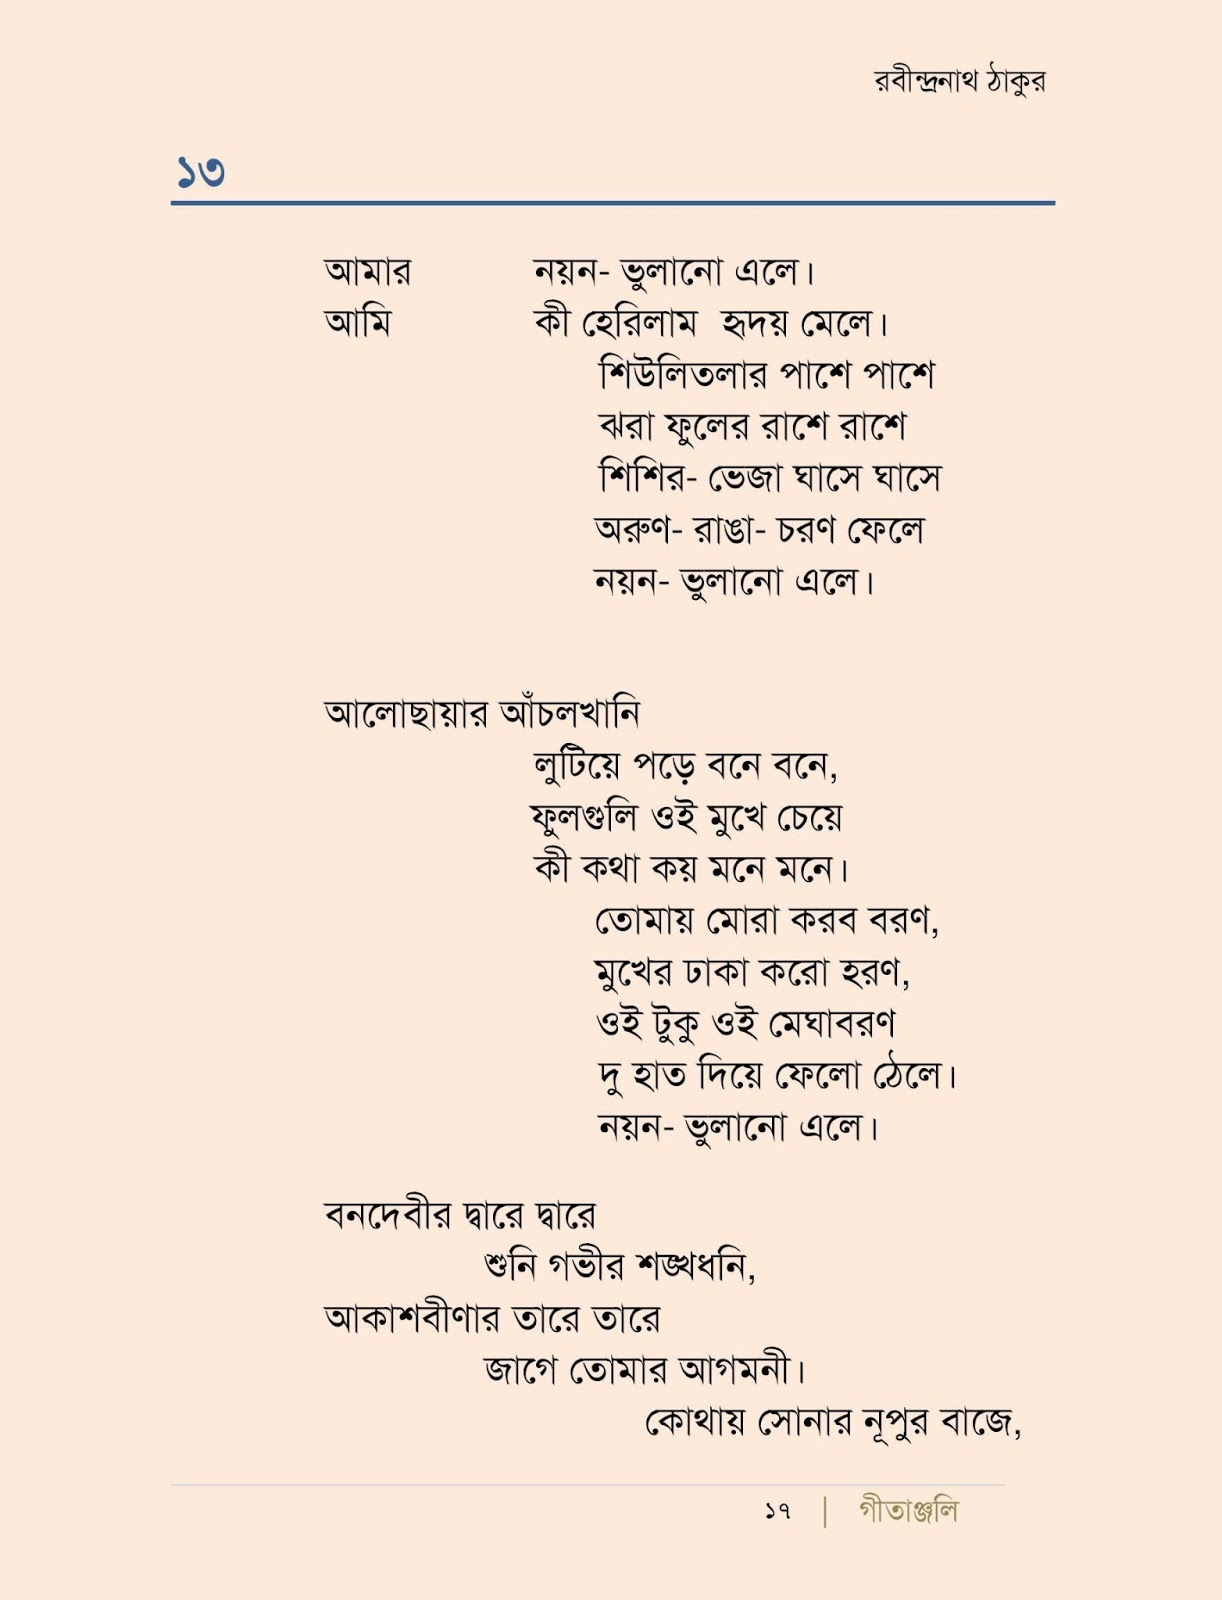 Gitanjali Bengali Font Software Download.rar